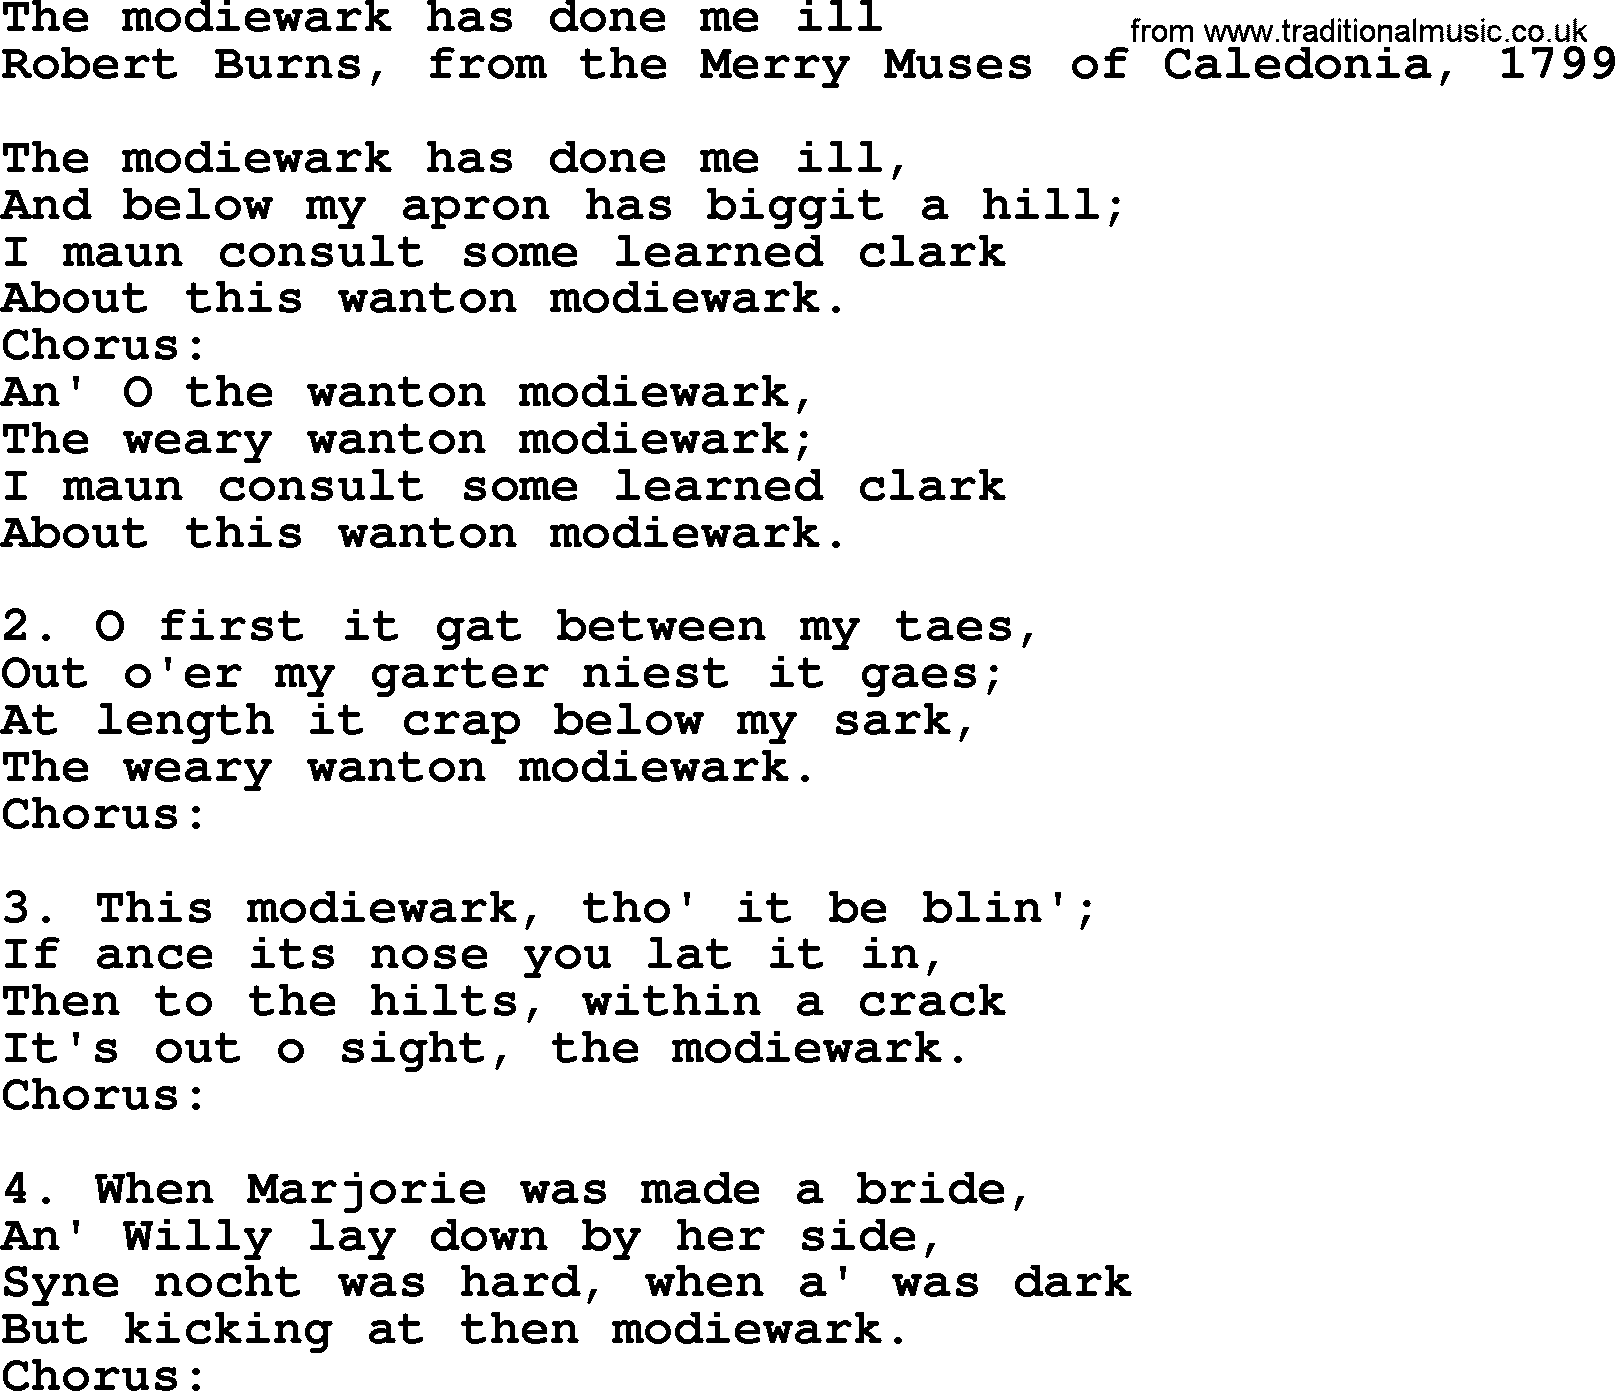 Robert Burns Songs & Lyrics: The Modiewark Has Done Me Ill